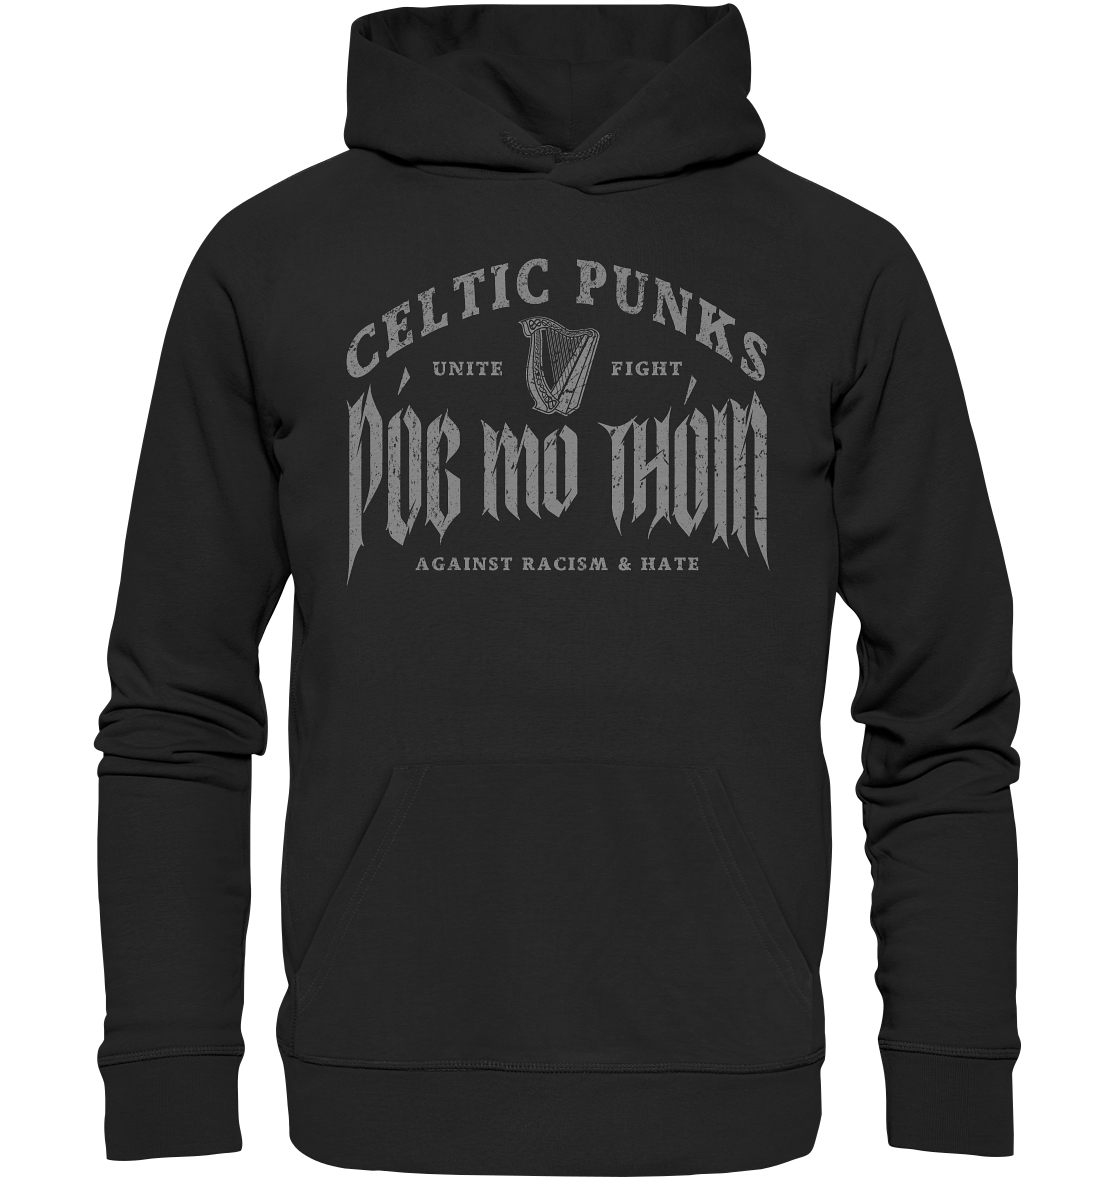 Póg Mo Thóin Streetwear "Celtic Punks Against Racism & Hate / Unite & Fight" - Organic Hoodie